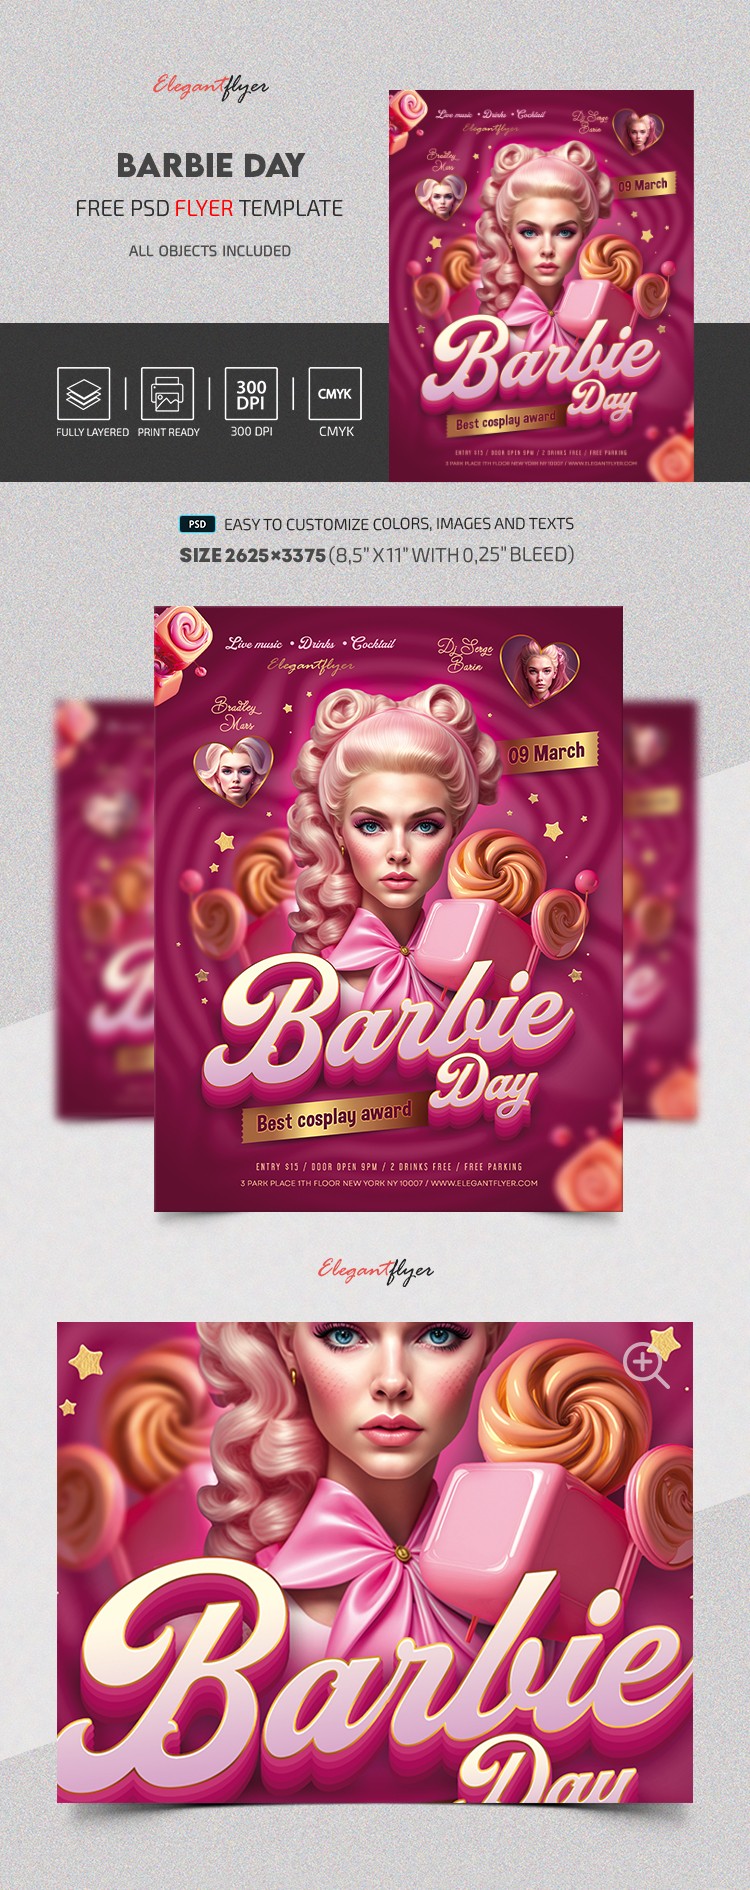 Barbie Day Party - Free Flyer PSD Template by ElegantFlyer